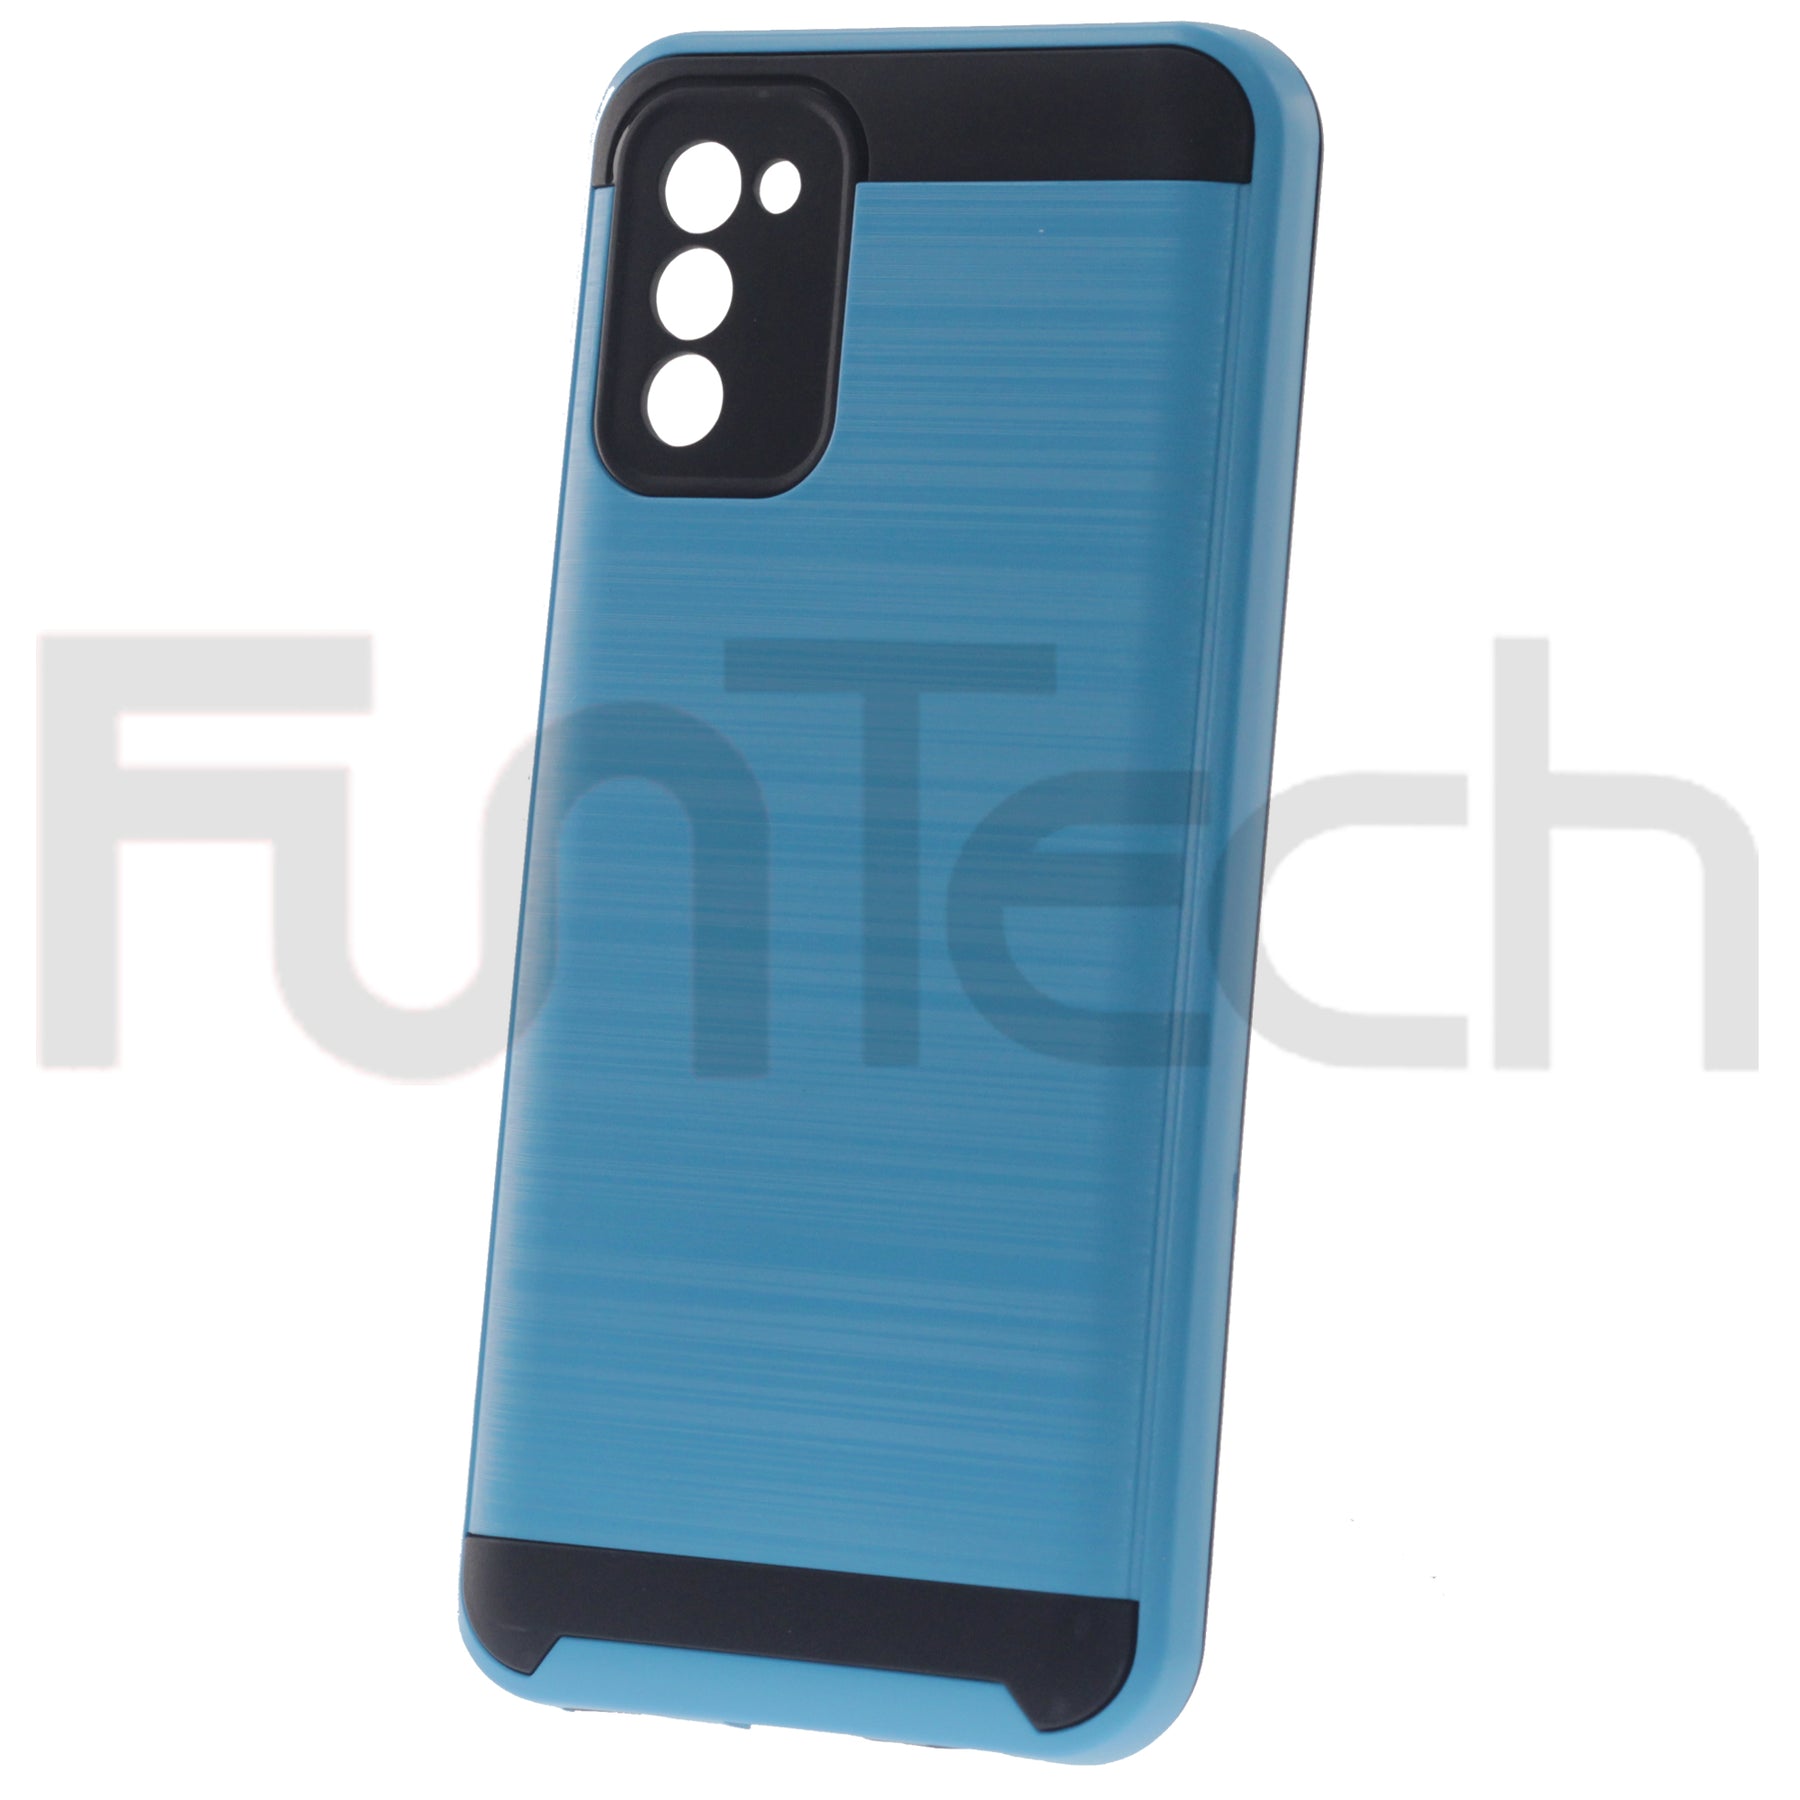 Samsung A02S, Slim Armor Case, Color Blue.